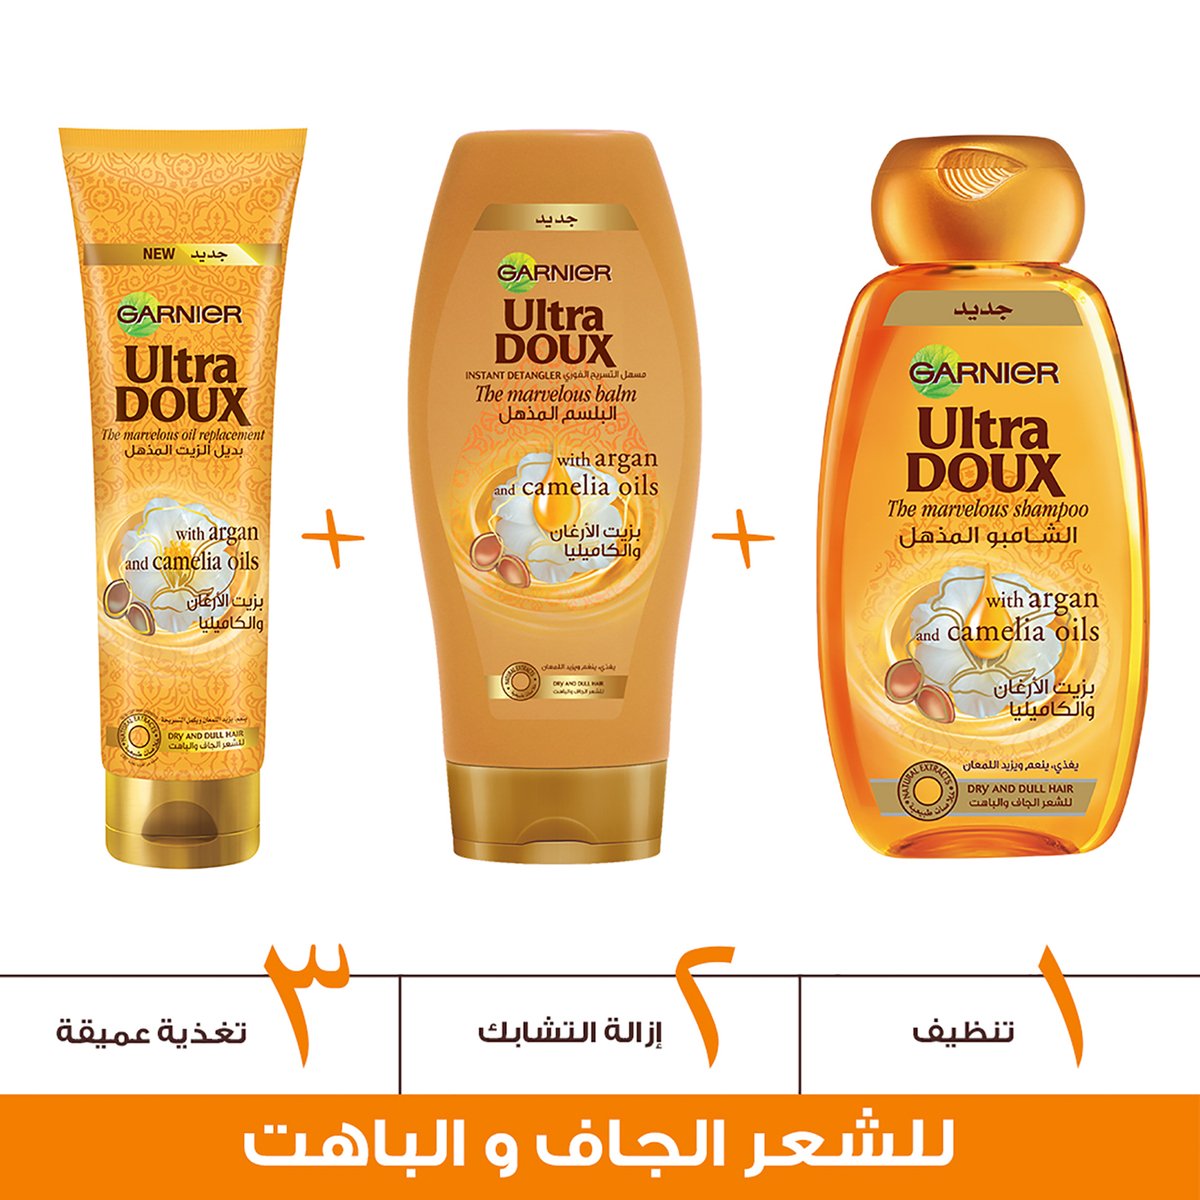 Garnier Ultra Doux Marvellous Shampoo with Argan and Camelia Oils 400 ml